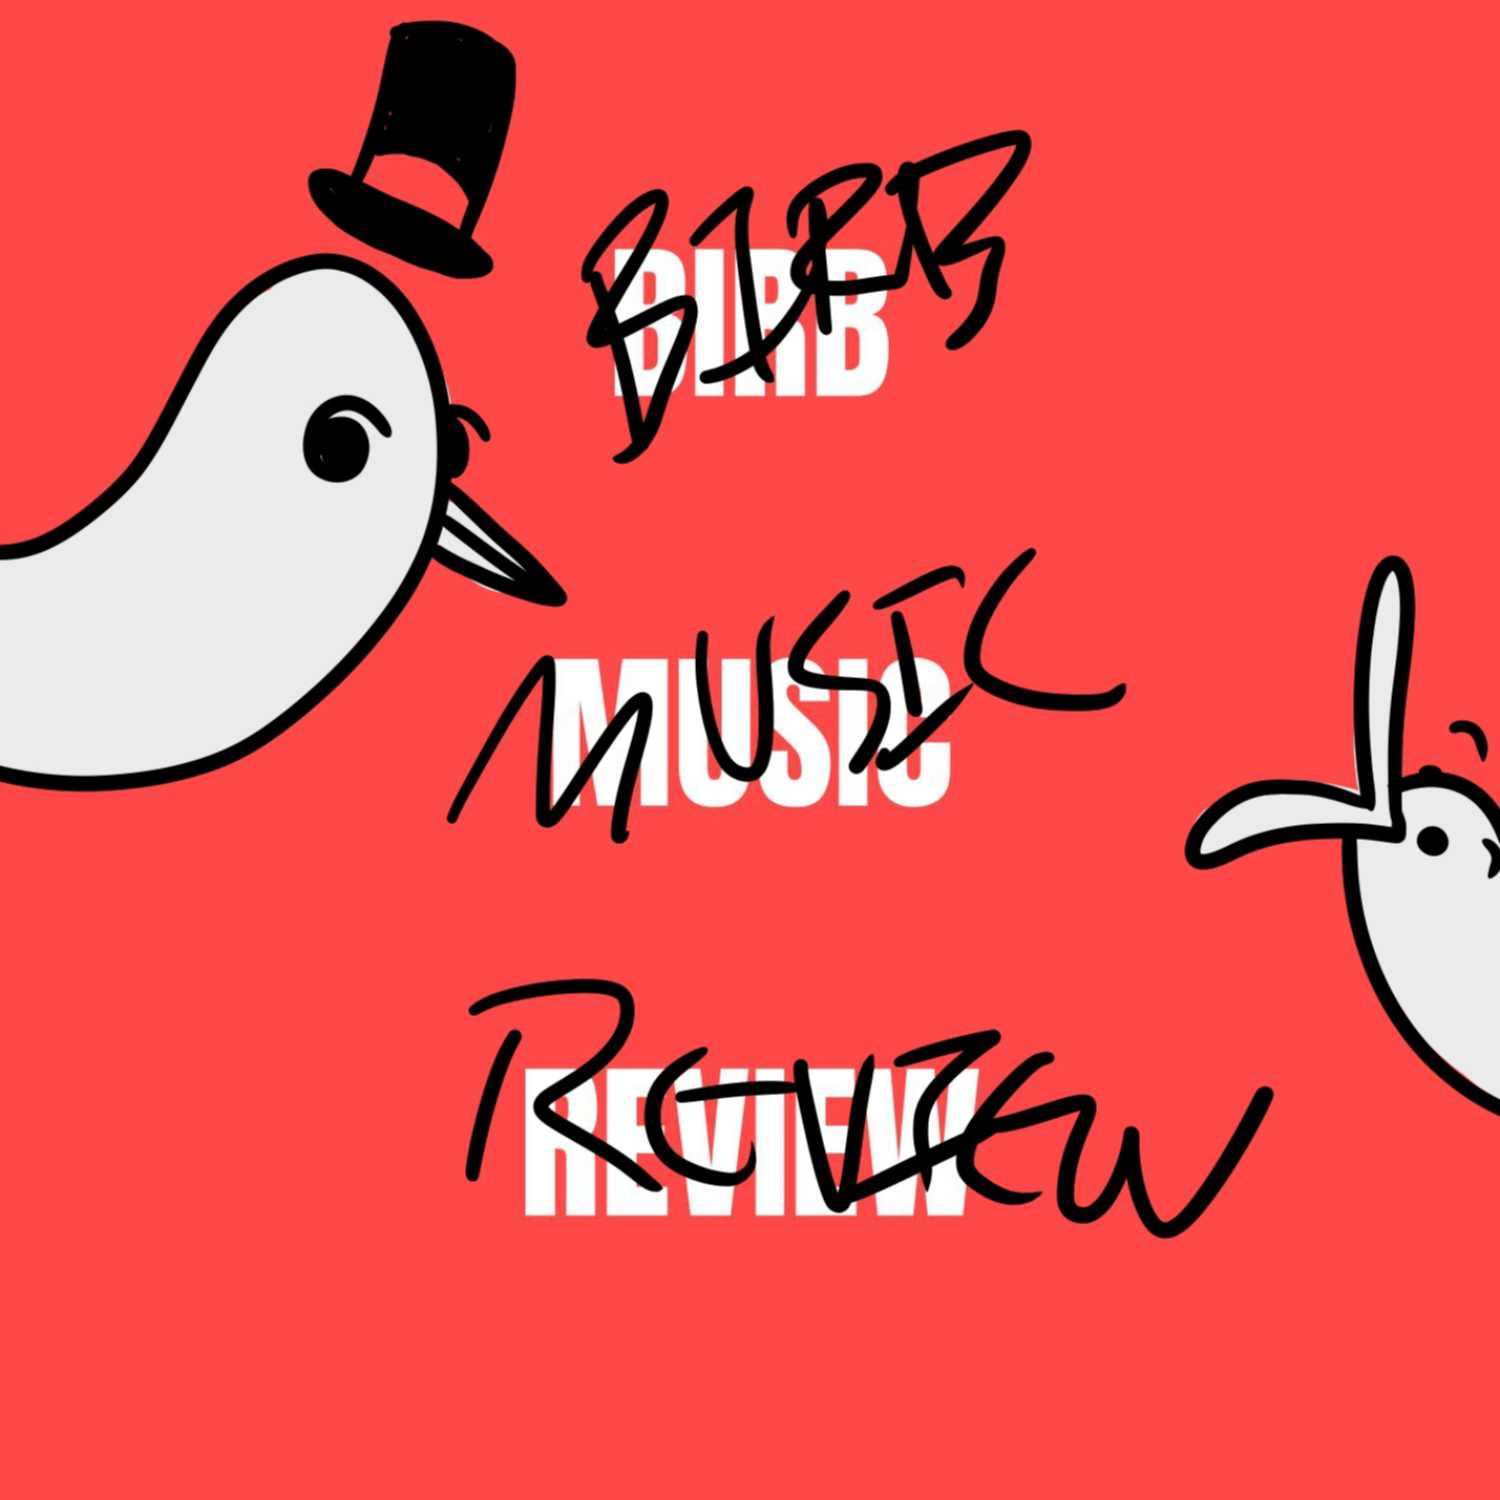 Birbs Music Review